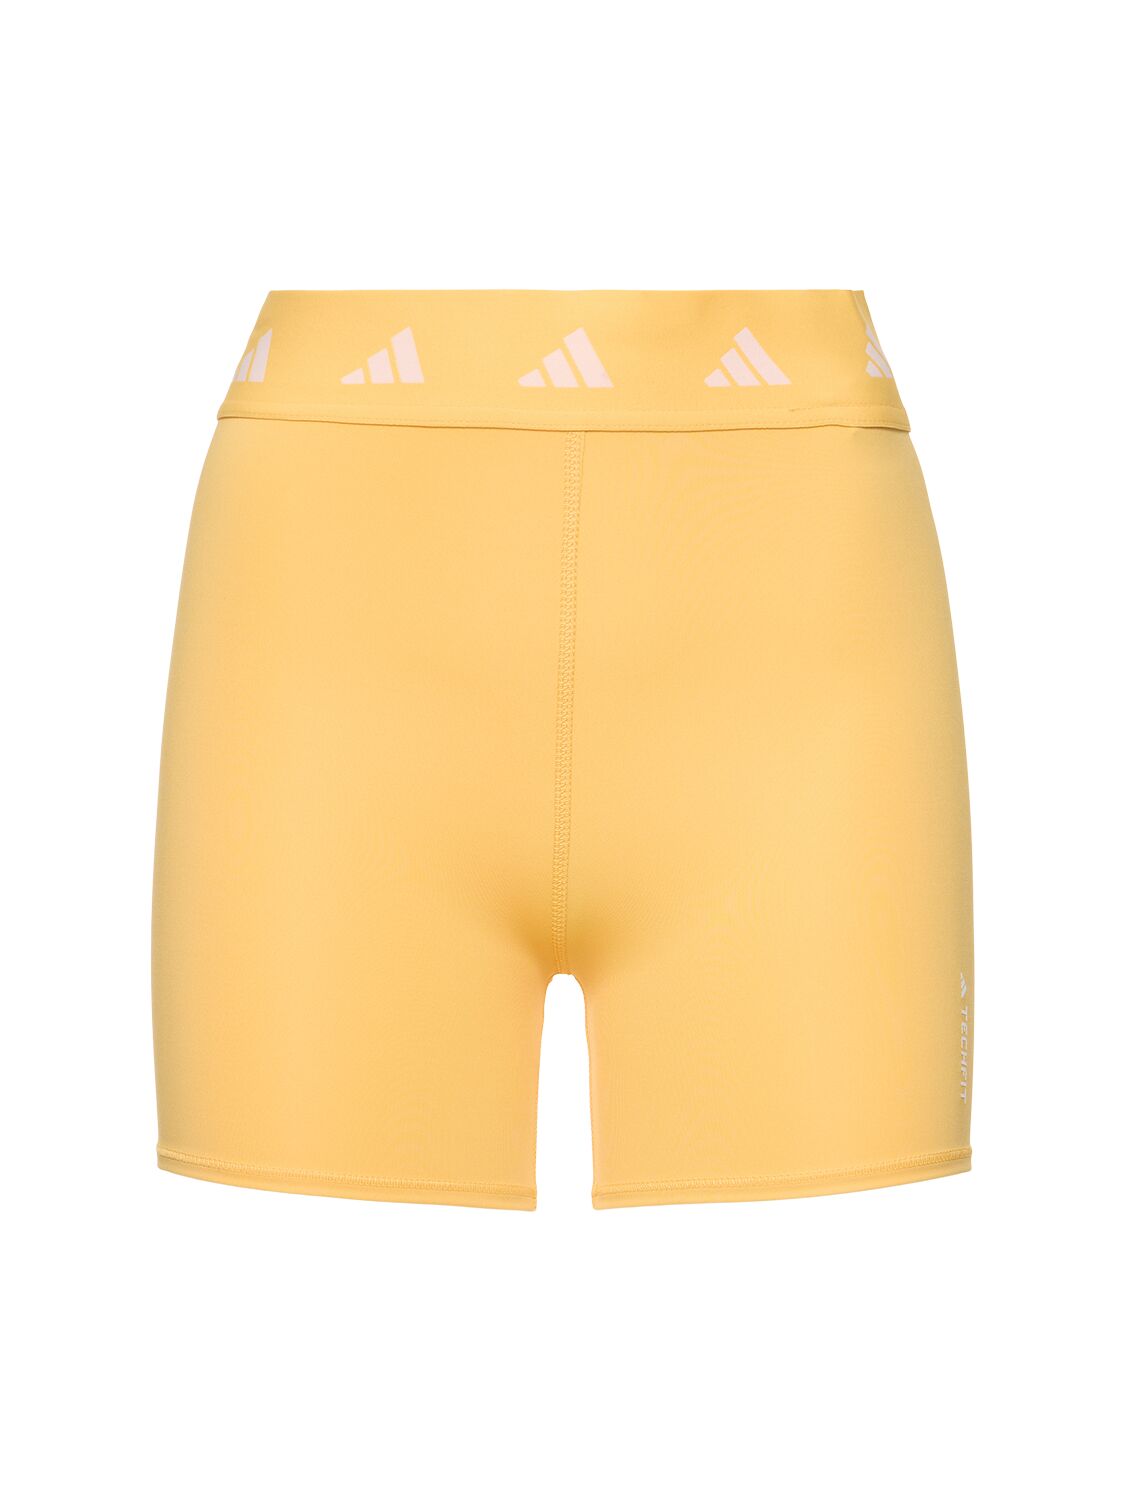 Adidas Originals Techfit短裤 In Orange,yellow